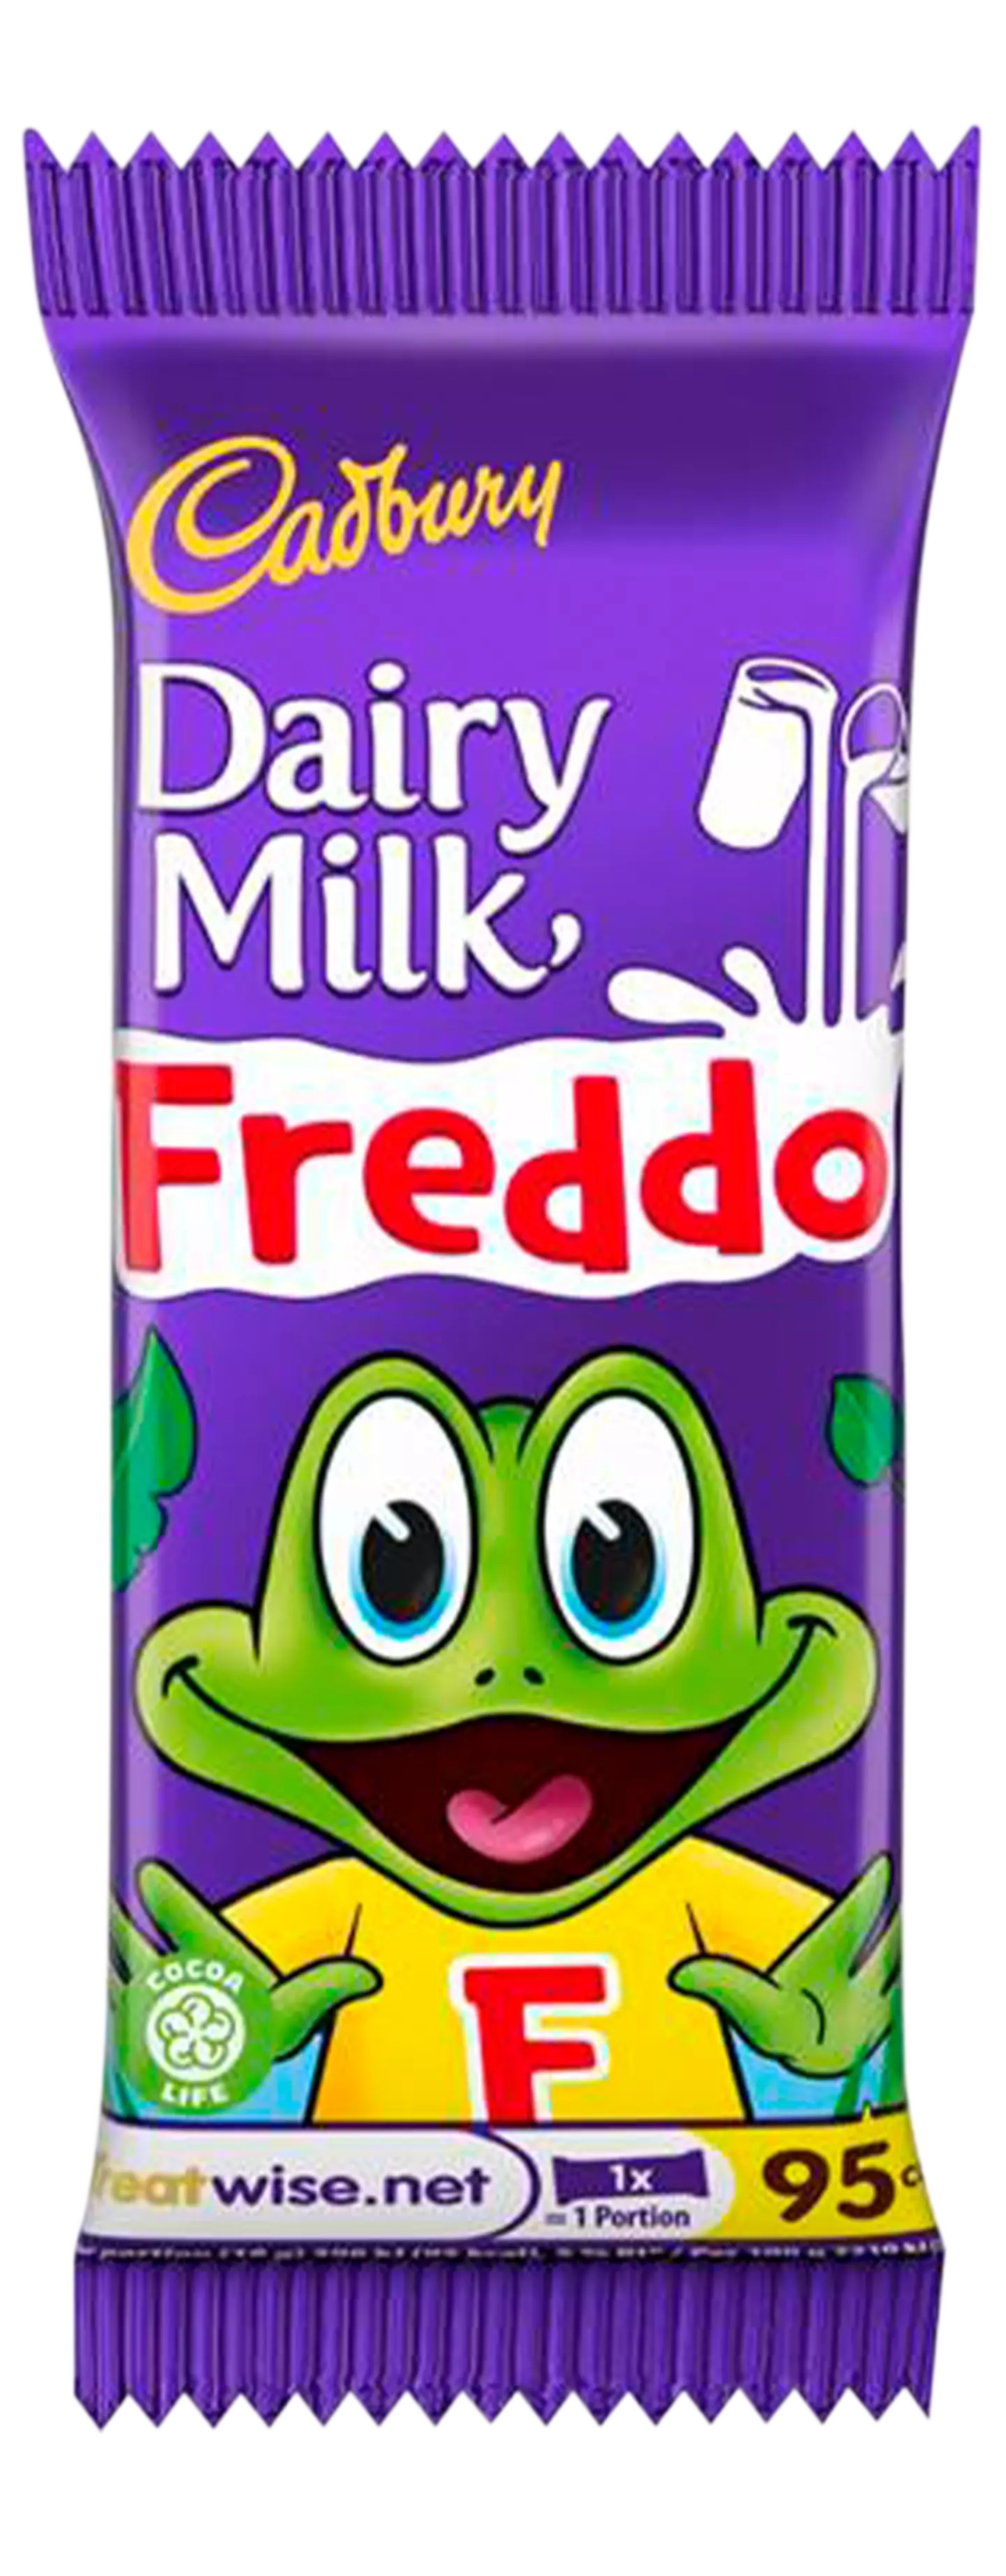 Cadbury's Freddo the Frog Dairy Milk bar is an epic snack.